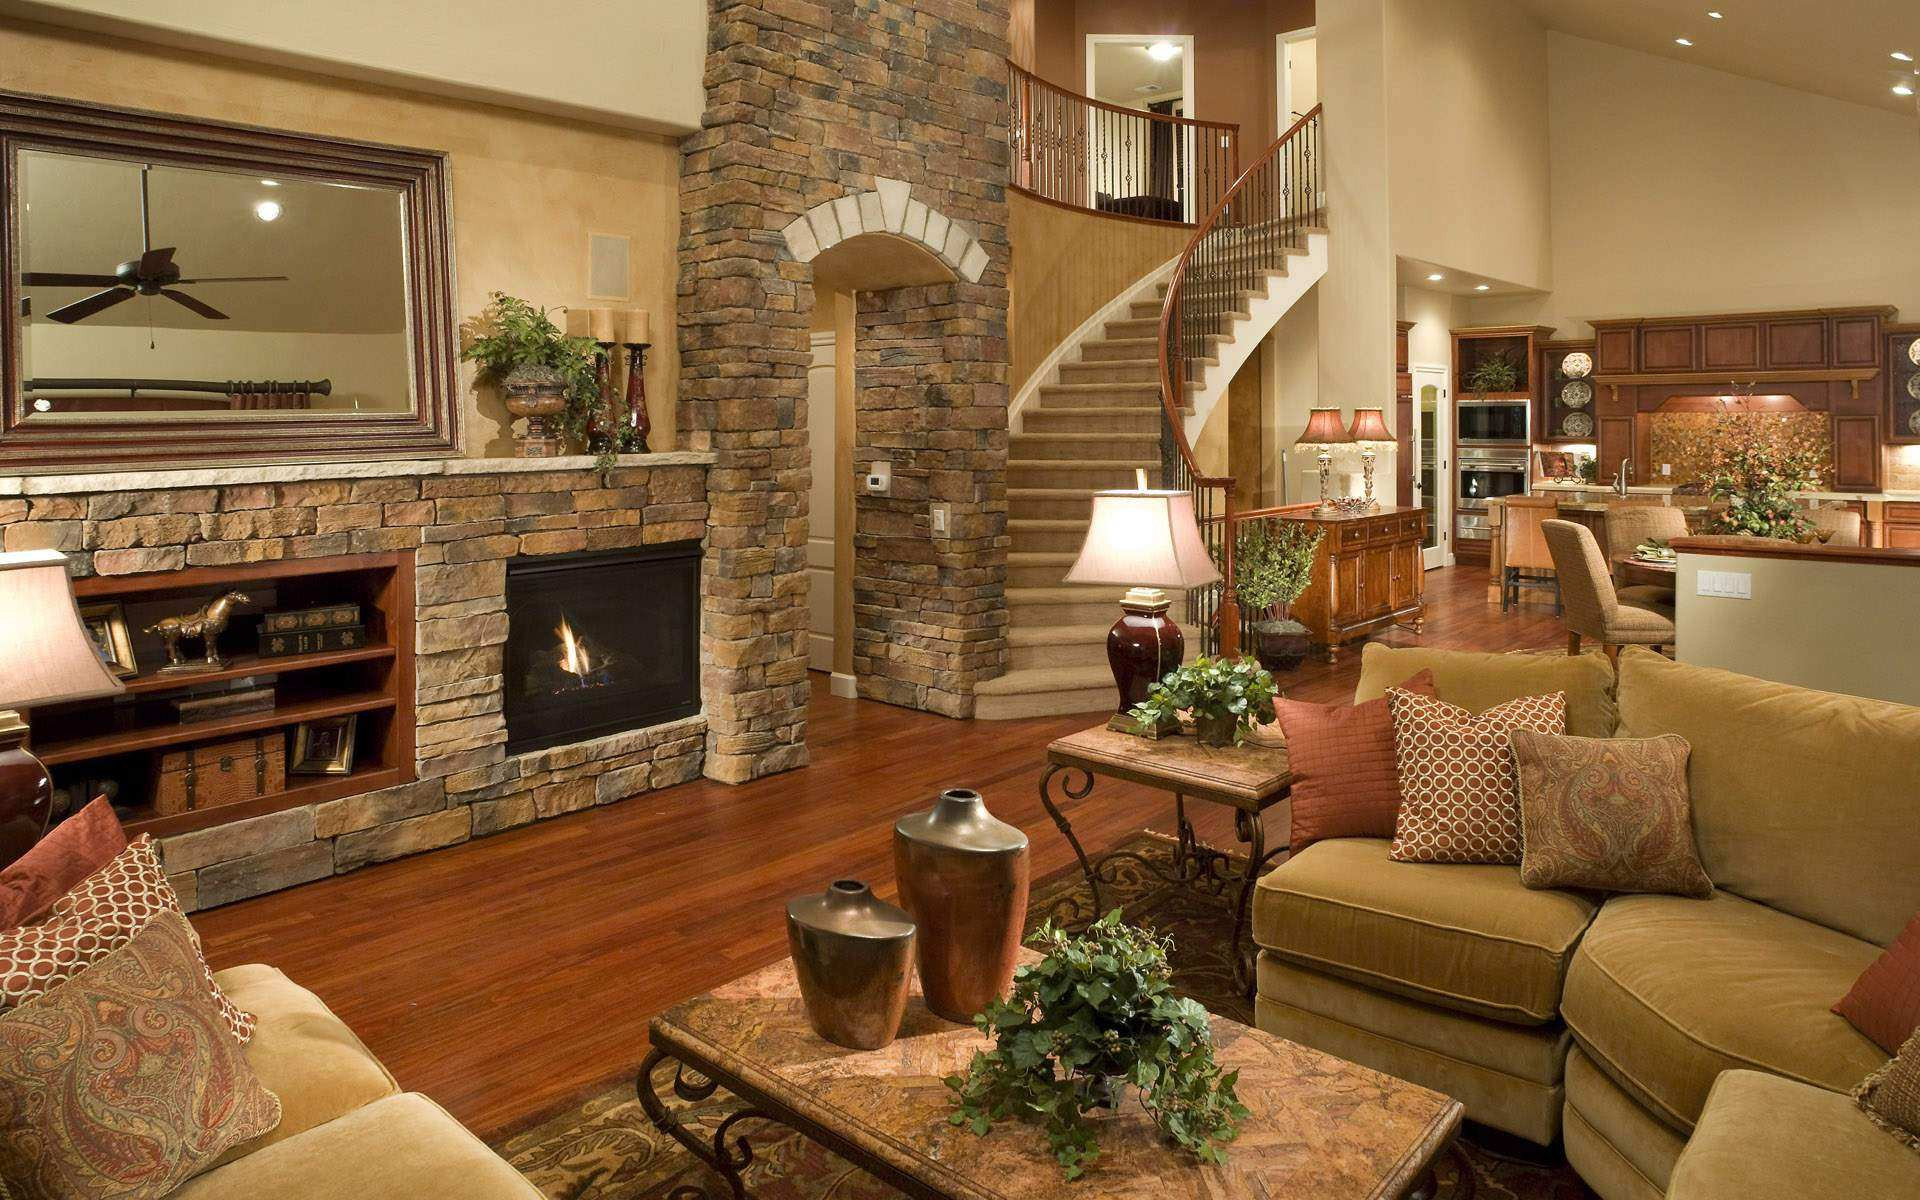 Interior Design Ideas Living Room
 25 Stunning Home Interior Designs Ideas – The WoW Style